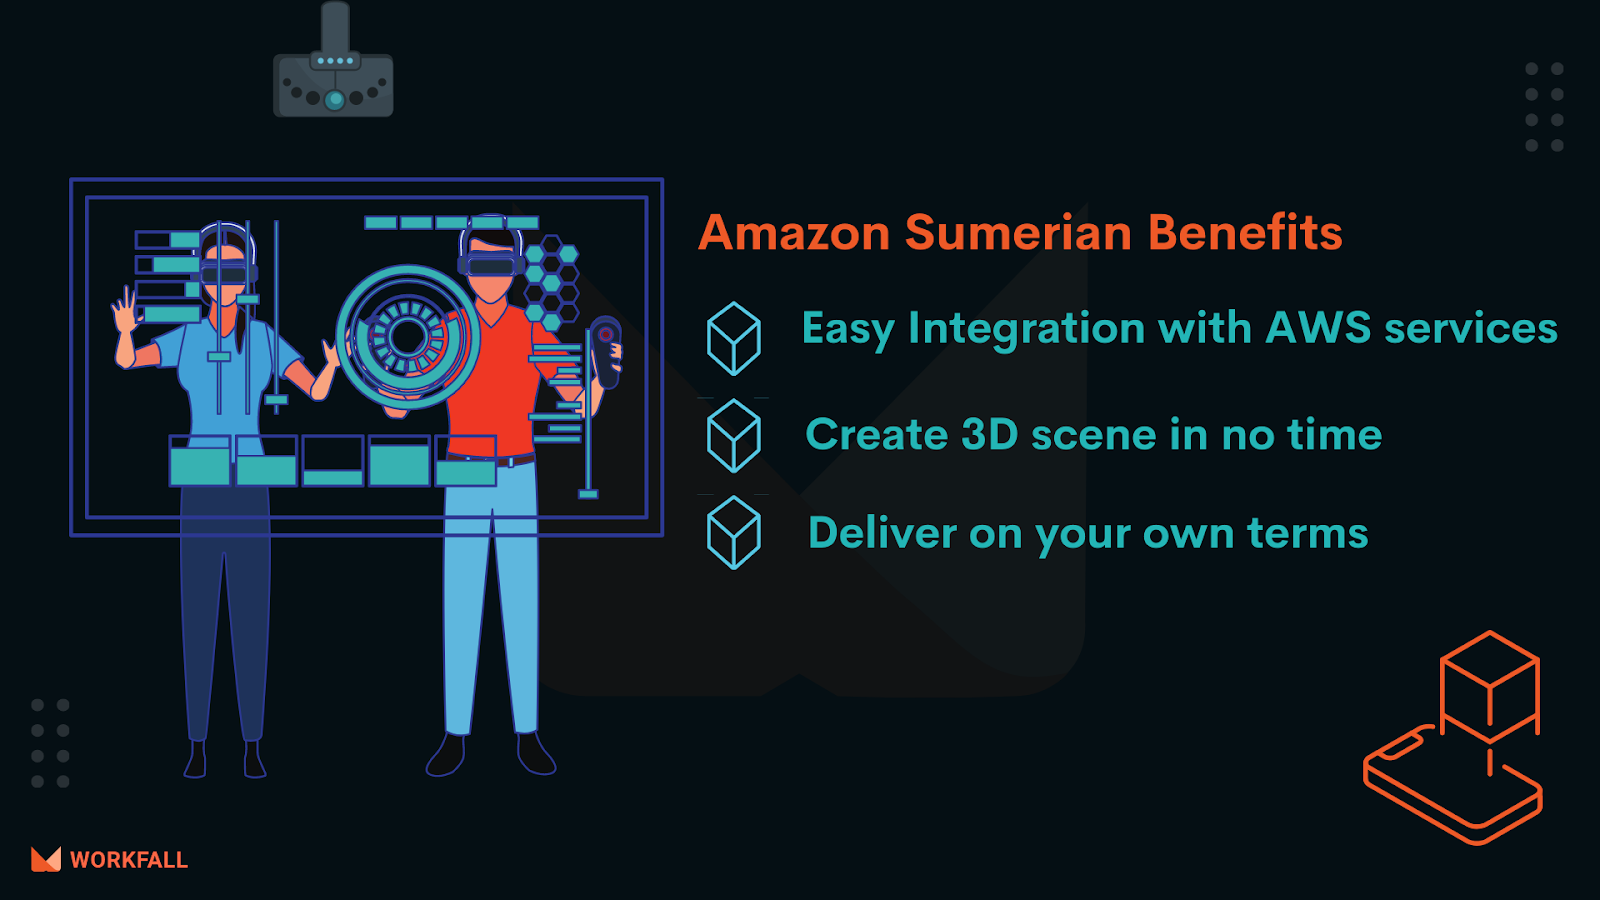 Benefits of Amazon Sumerian